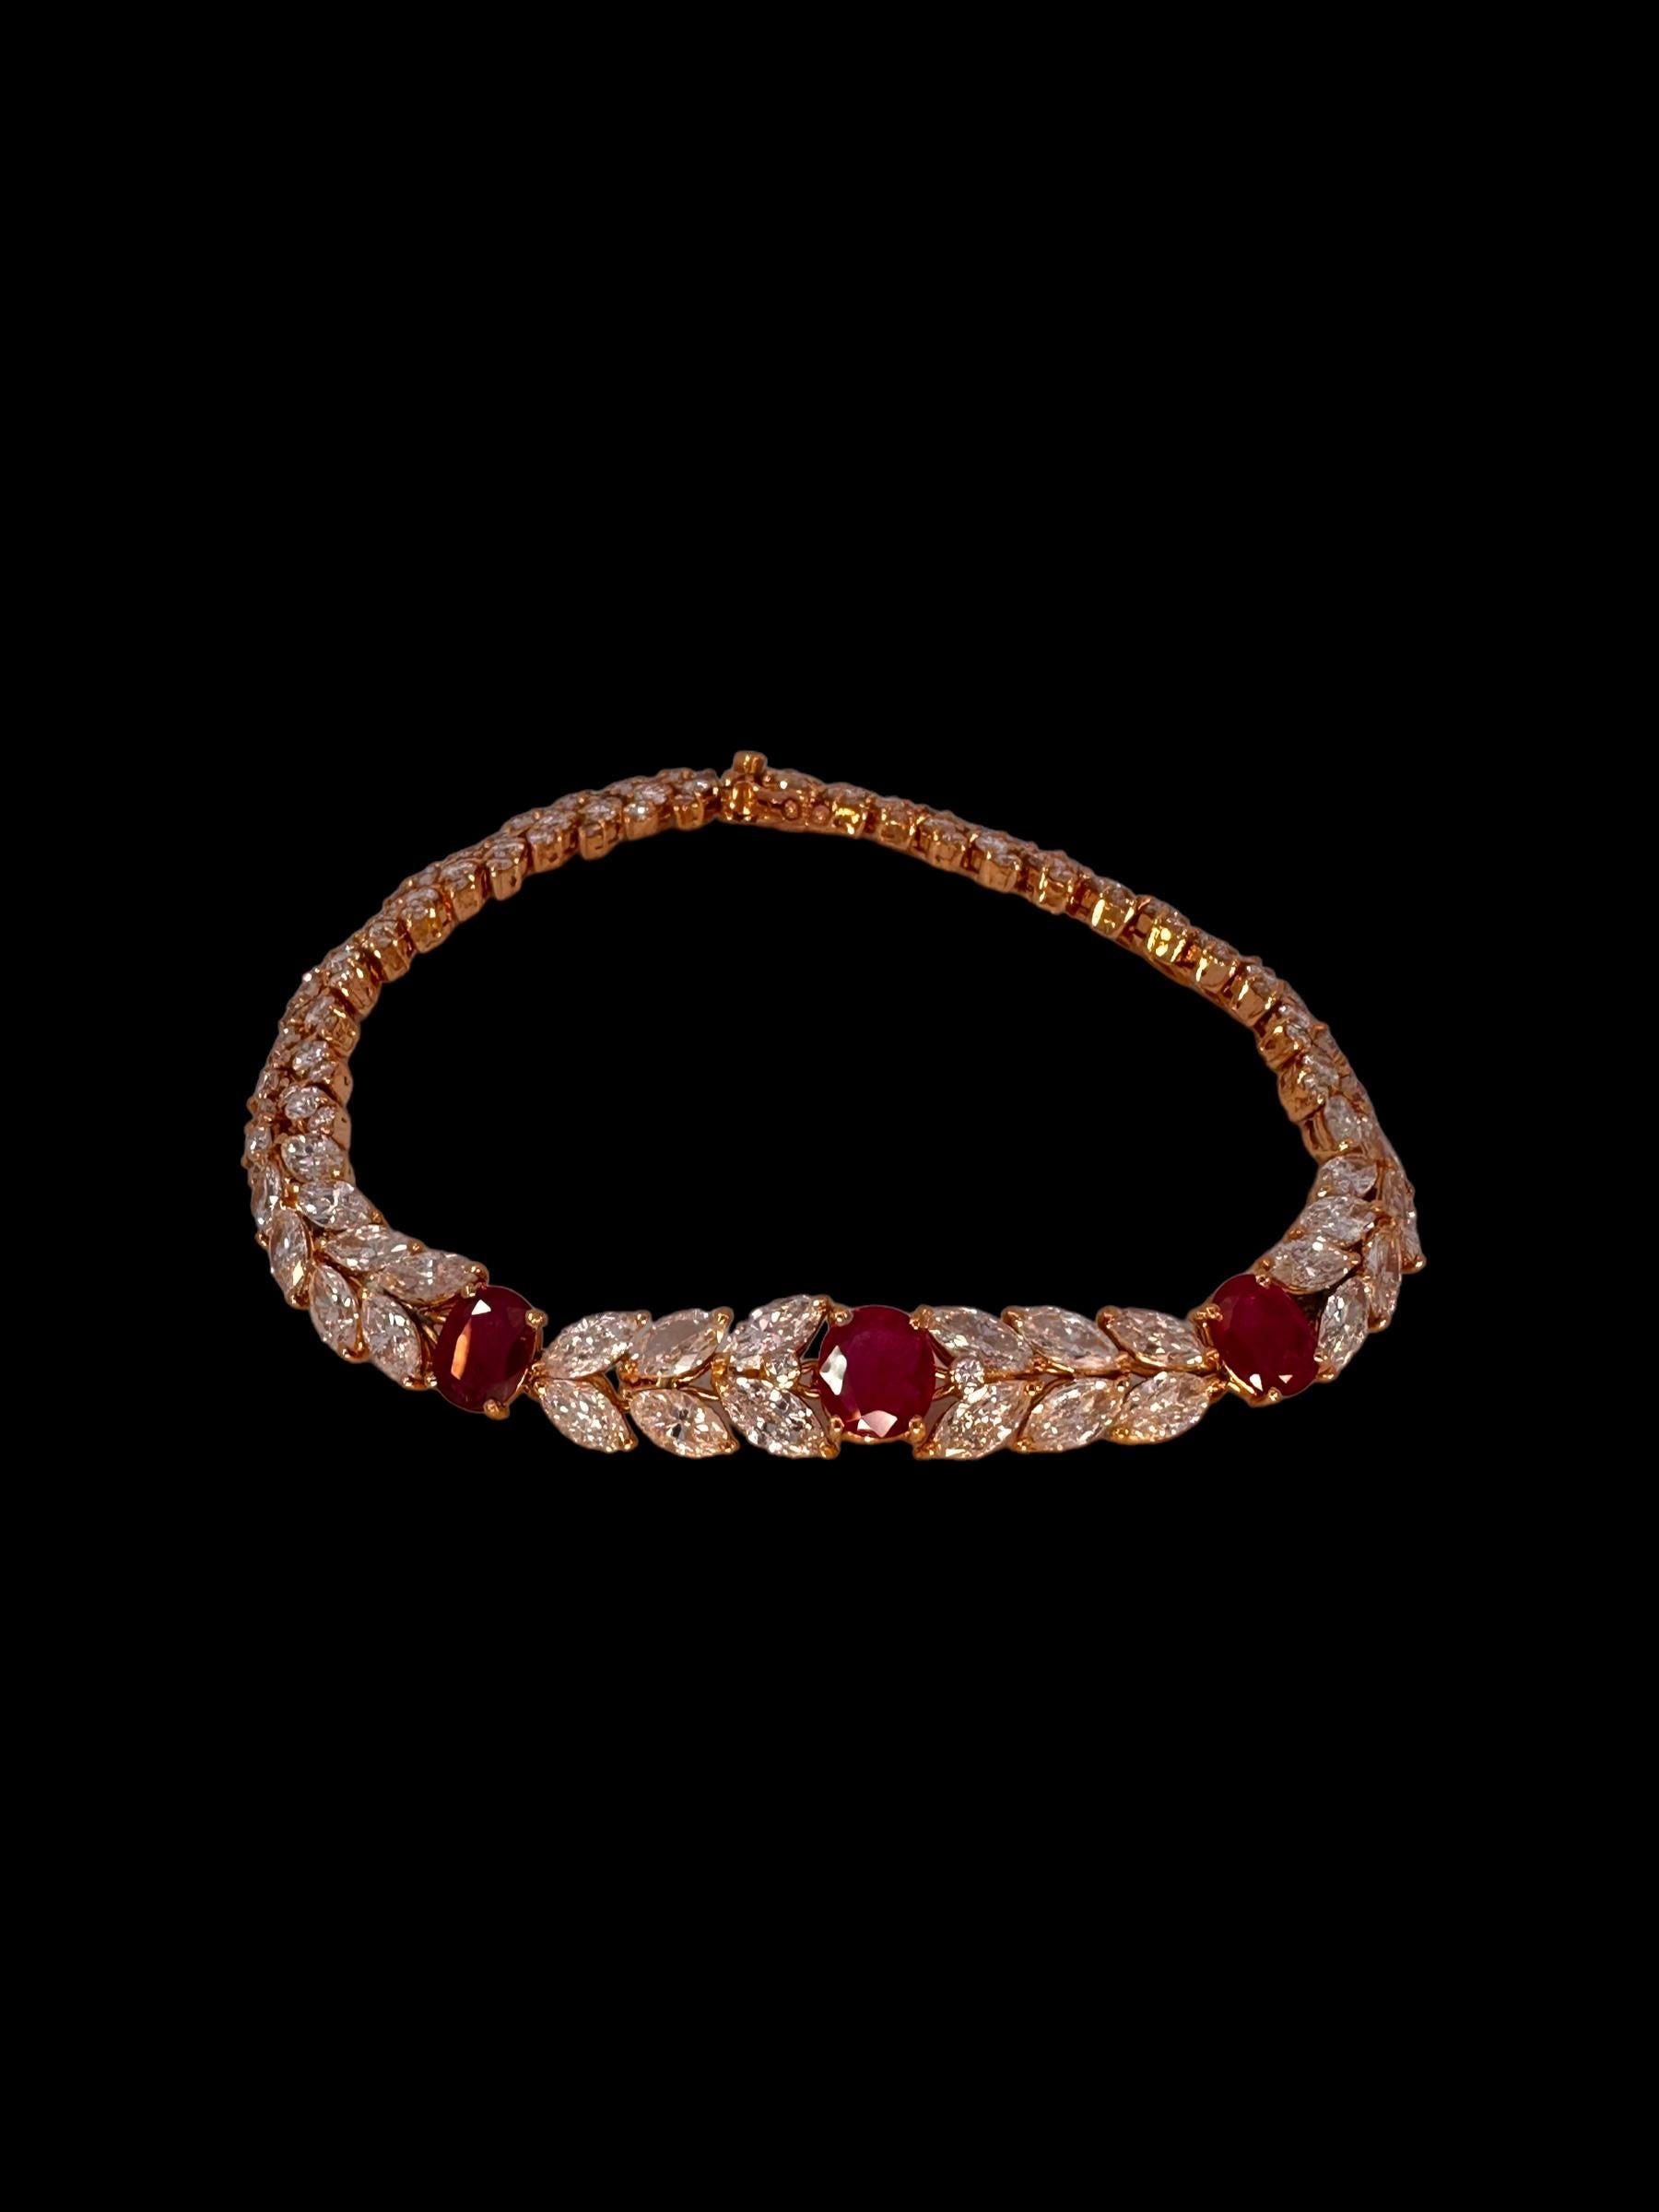 Adler Geneva Ruby & Diamond set: Necklace,Earrings,Ring & Bracelet

17 Ct Rubies & 35 to 40 Ct Diamonds